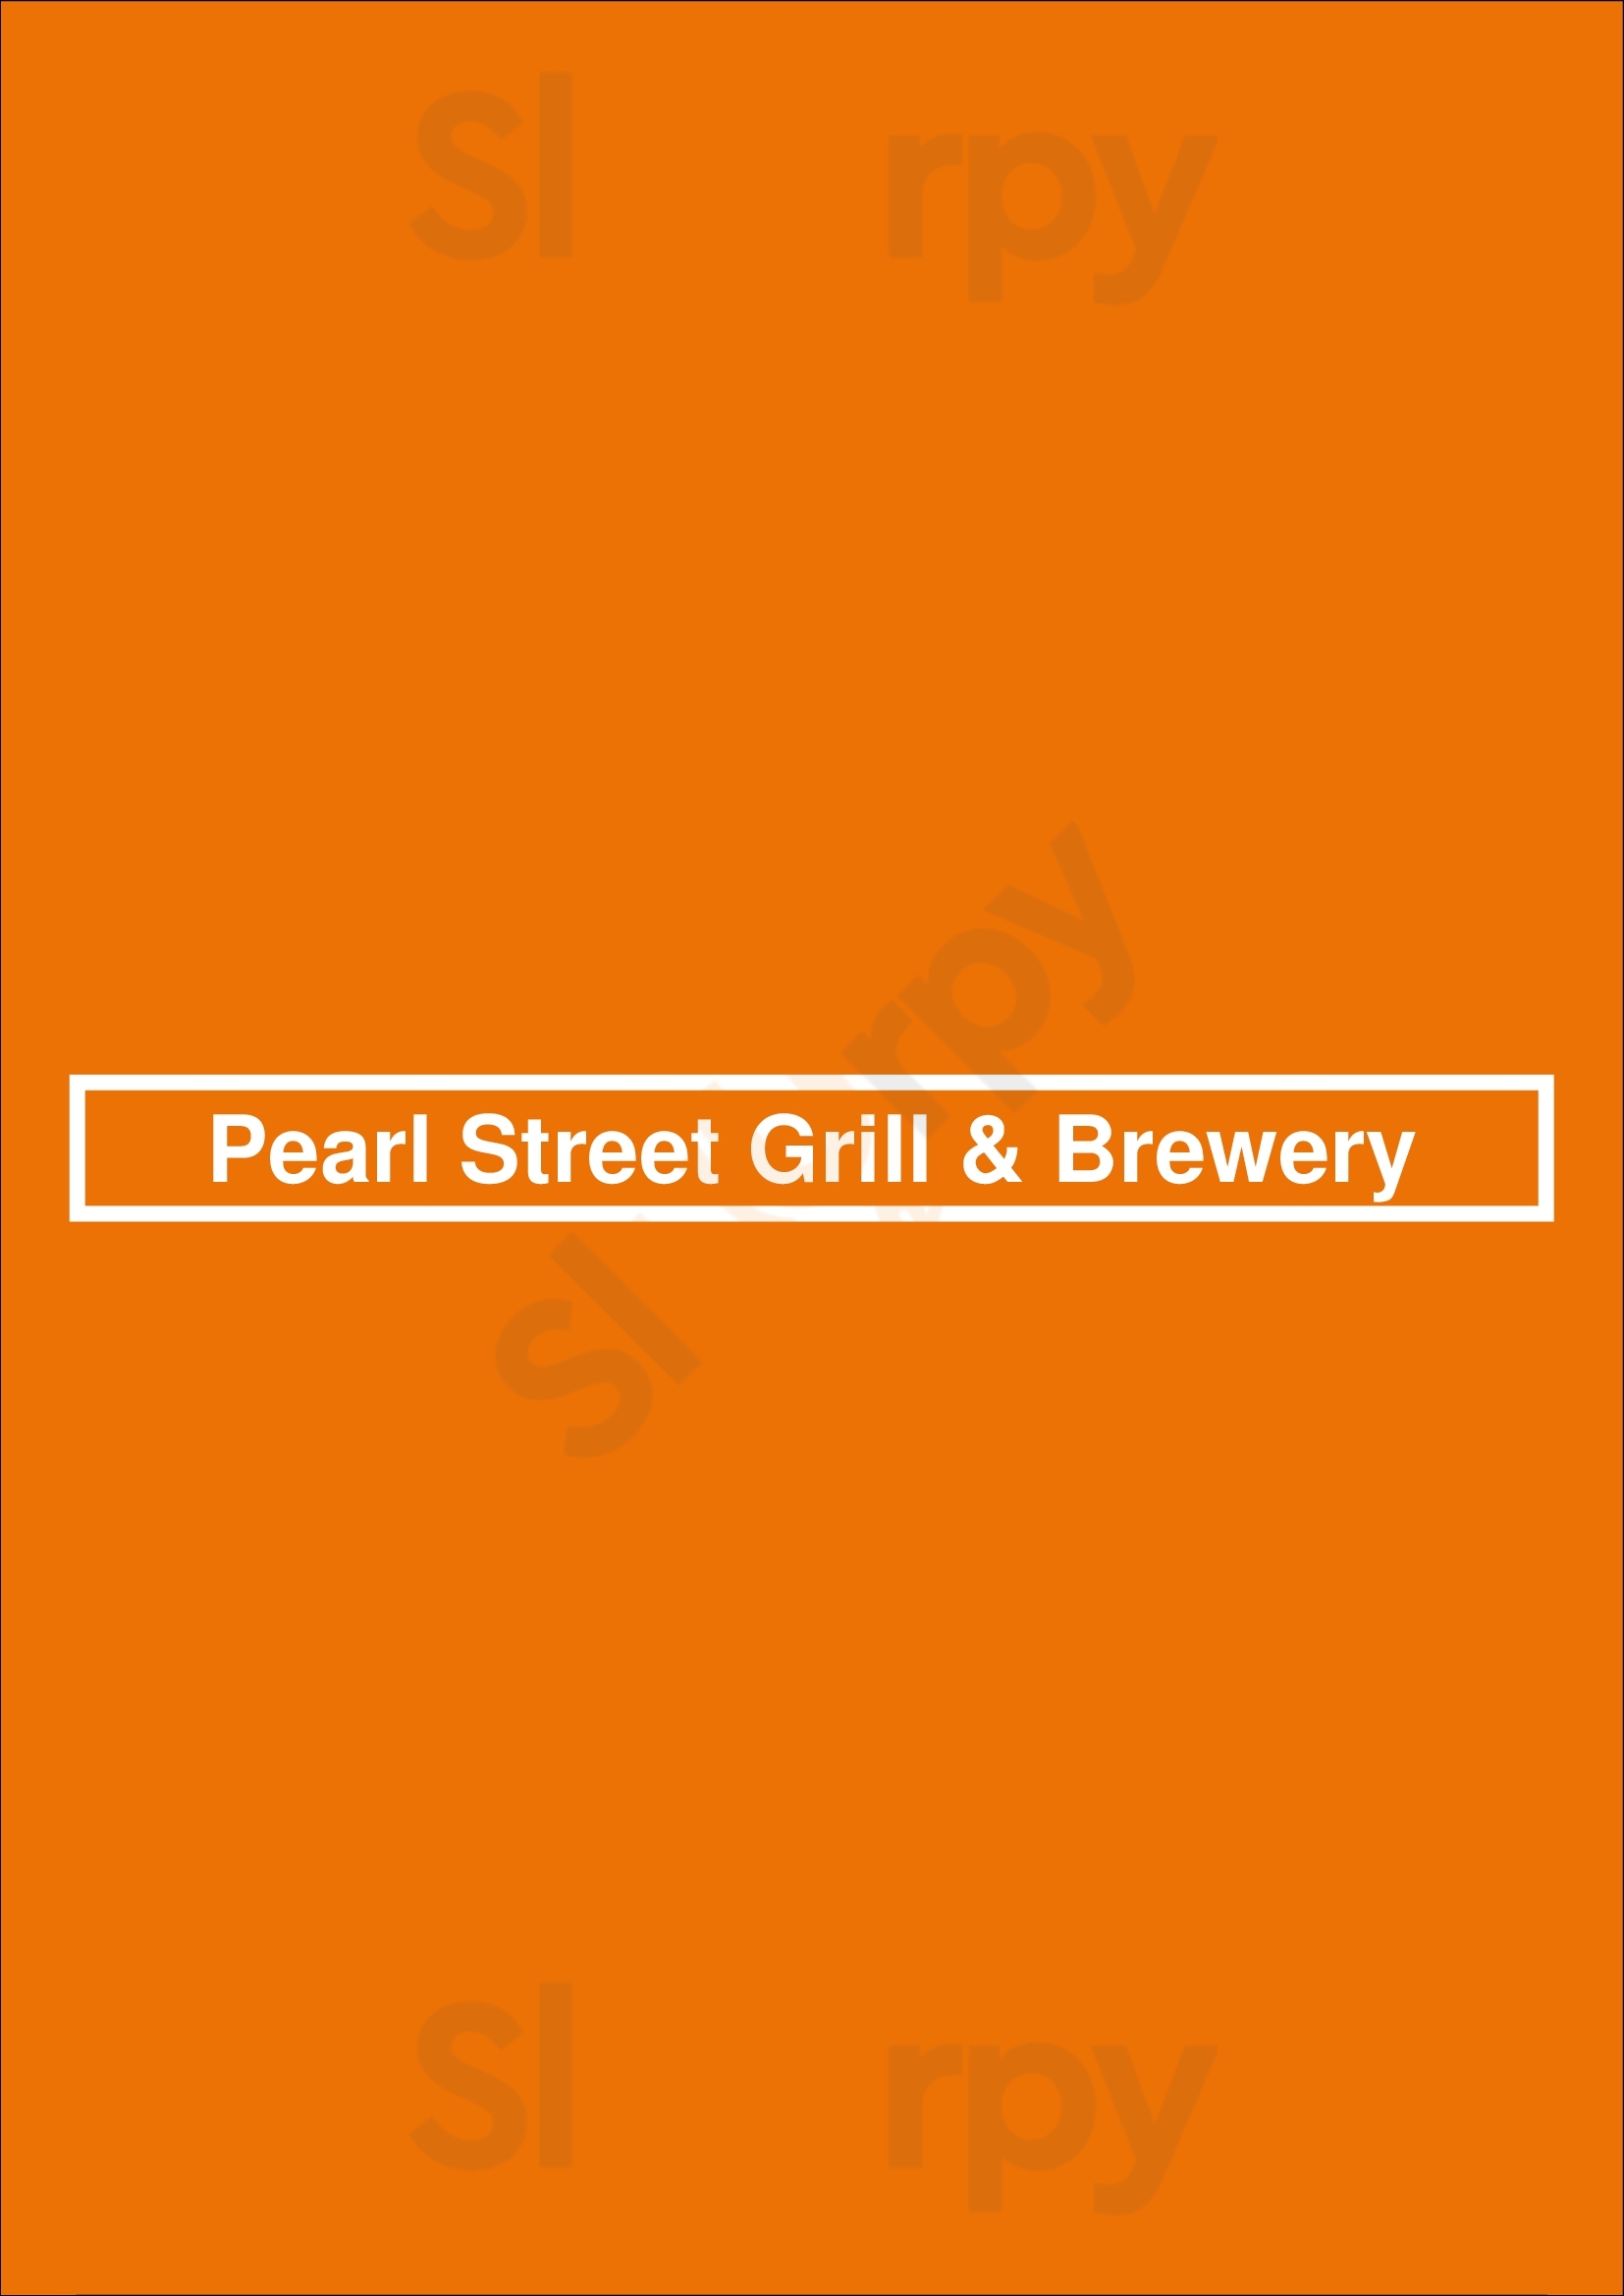 Pearl Street Grill & Brewery Buffalo Menu - 1